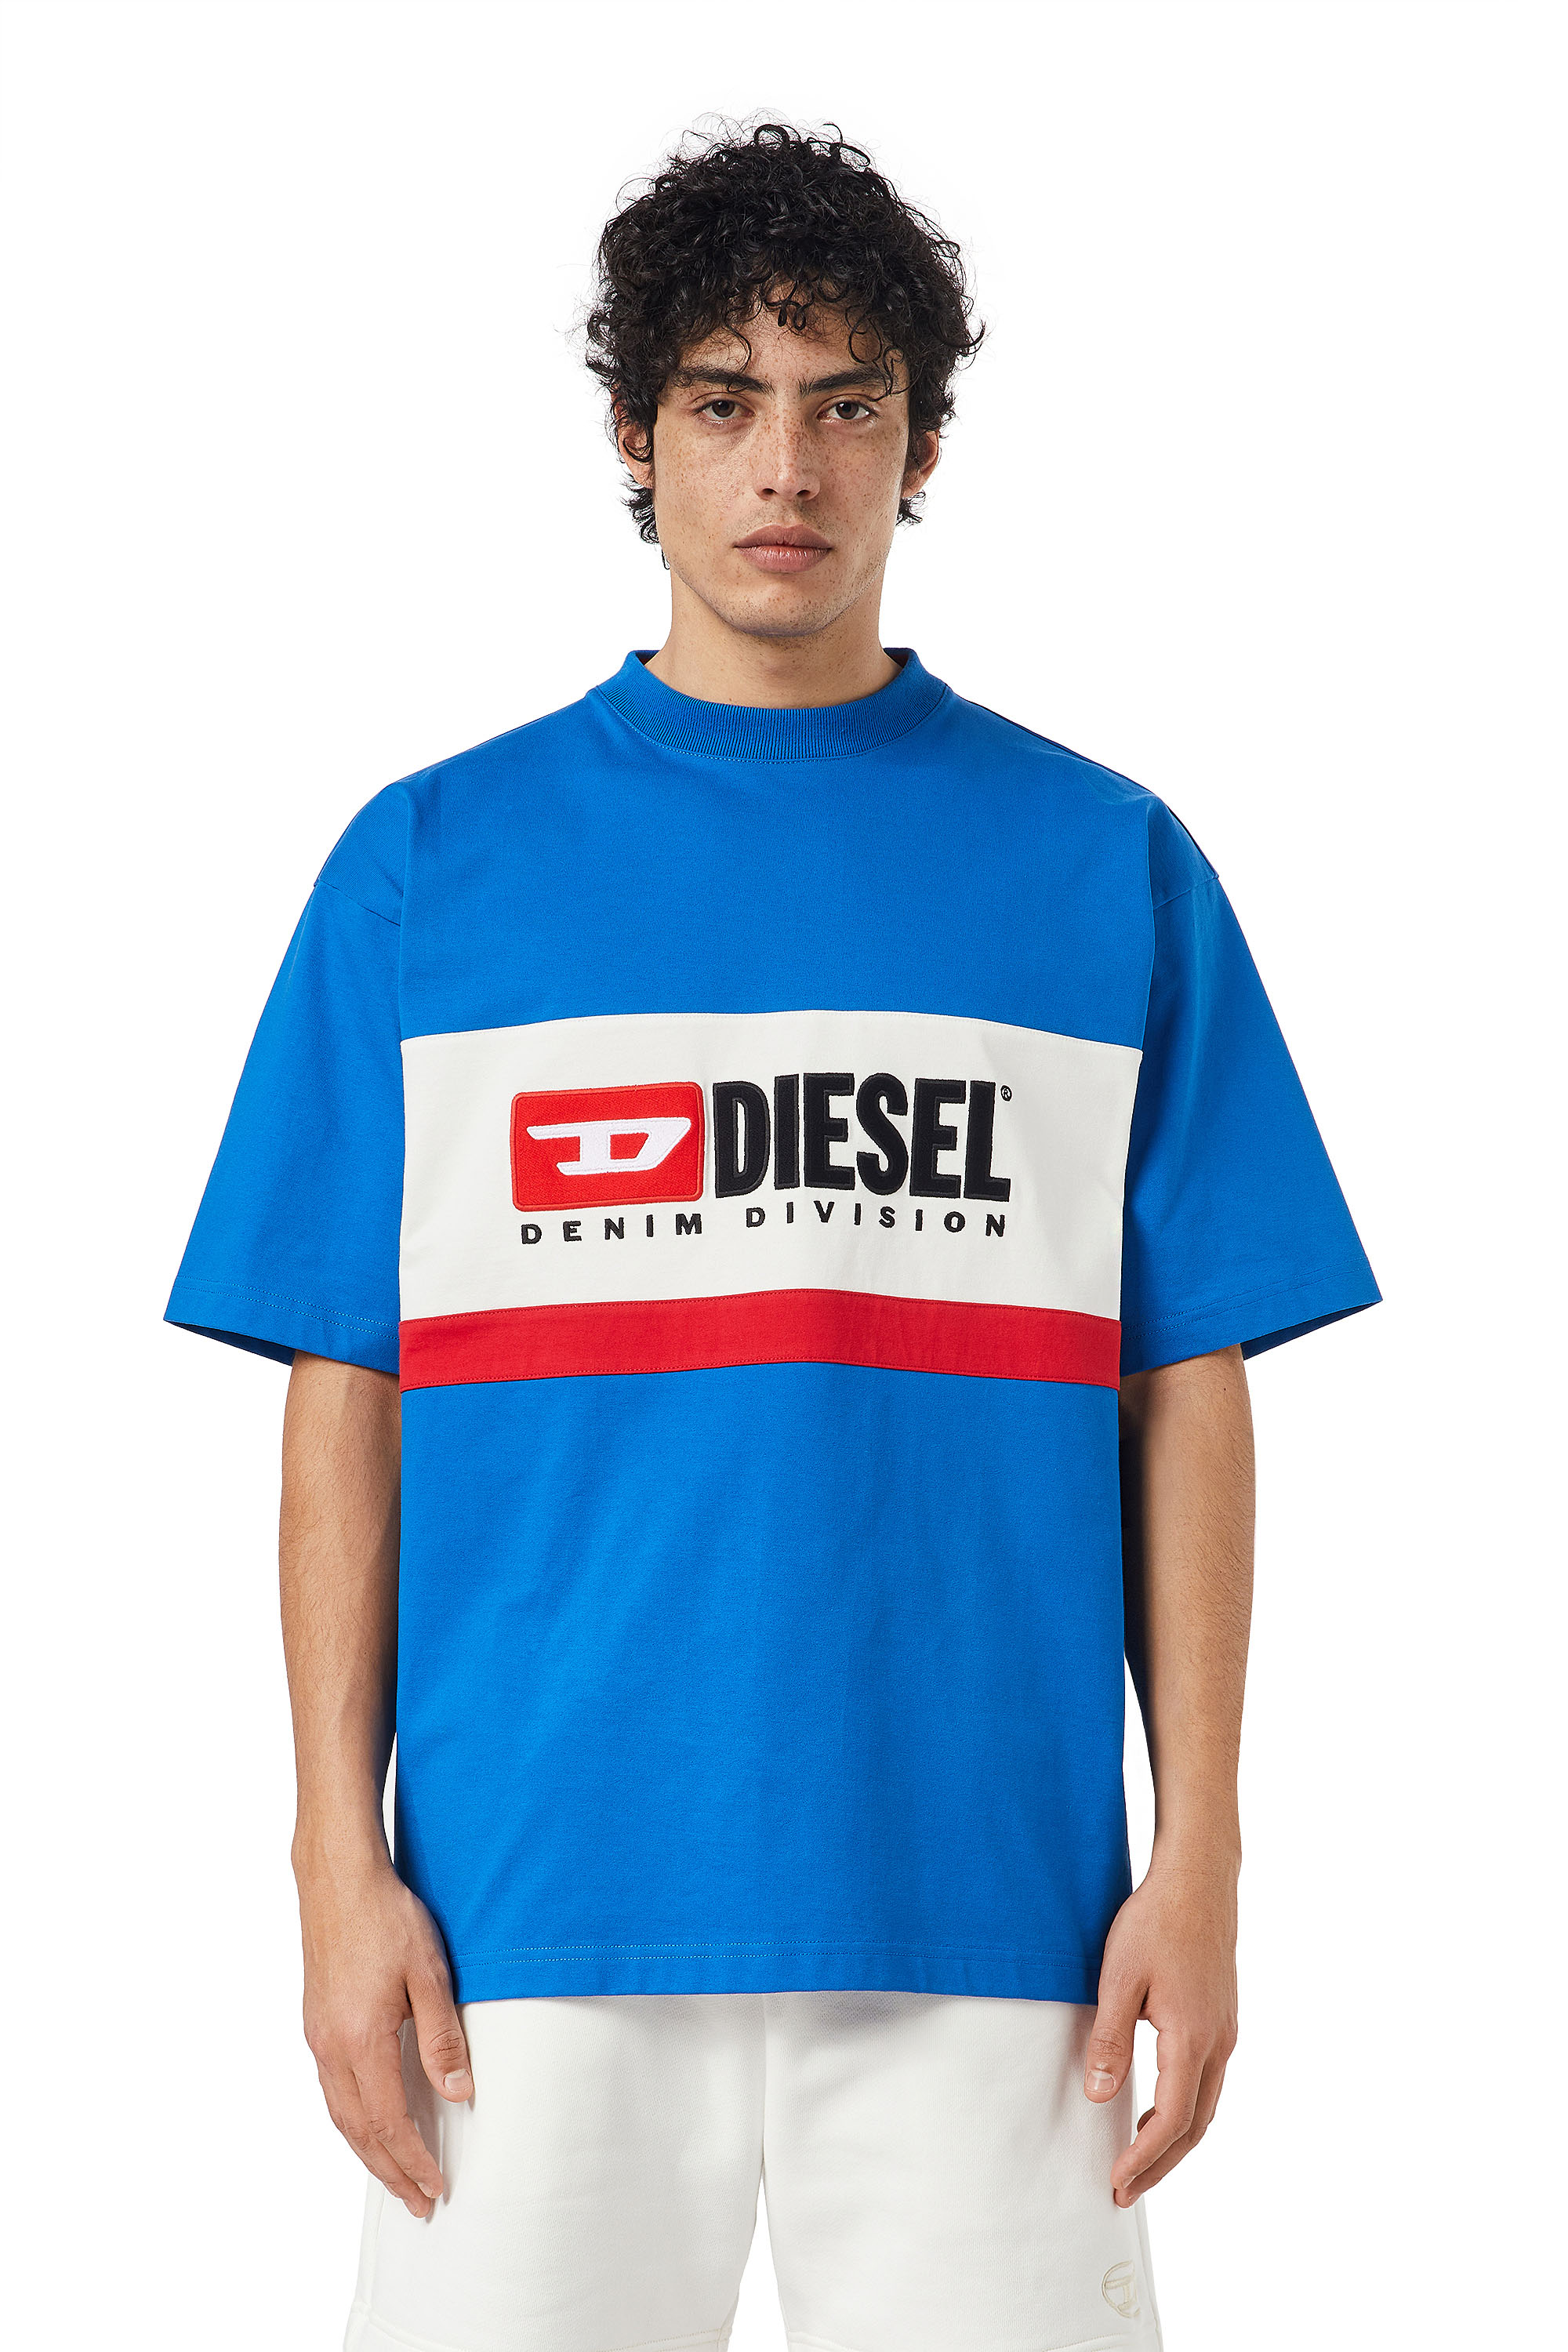 Diesel - T-STREAP-DIVISION, Blau - Image 3